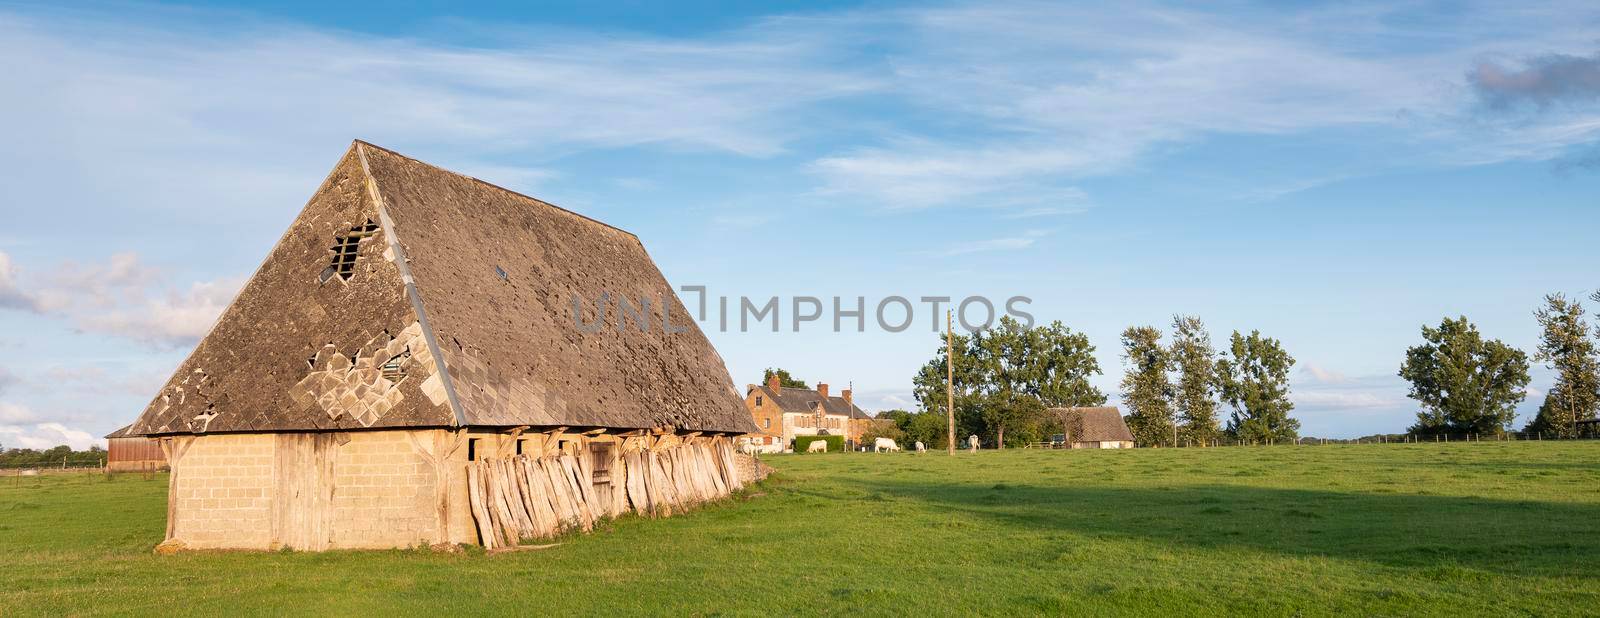 old barn and sheds in regional park boucles de la seine near rouen in france by ahavelaar